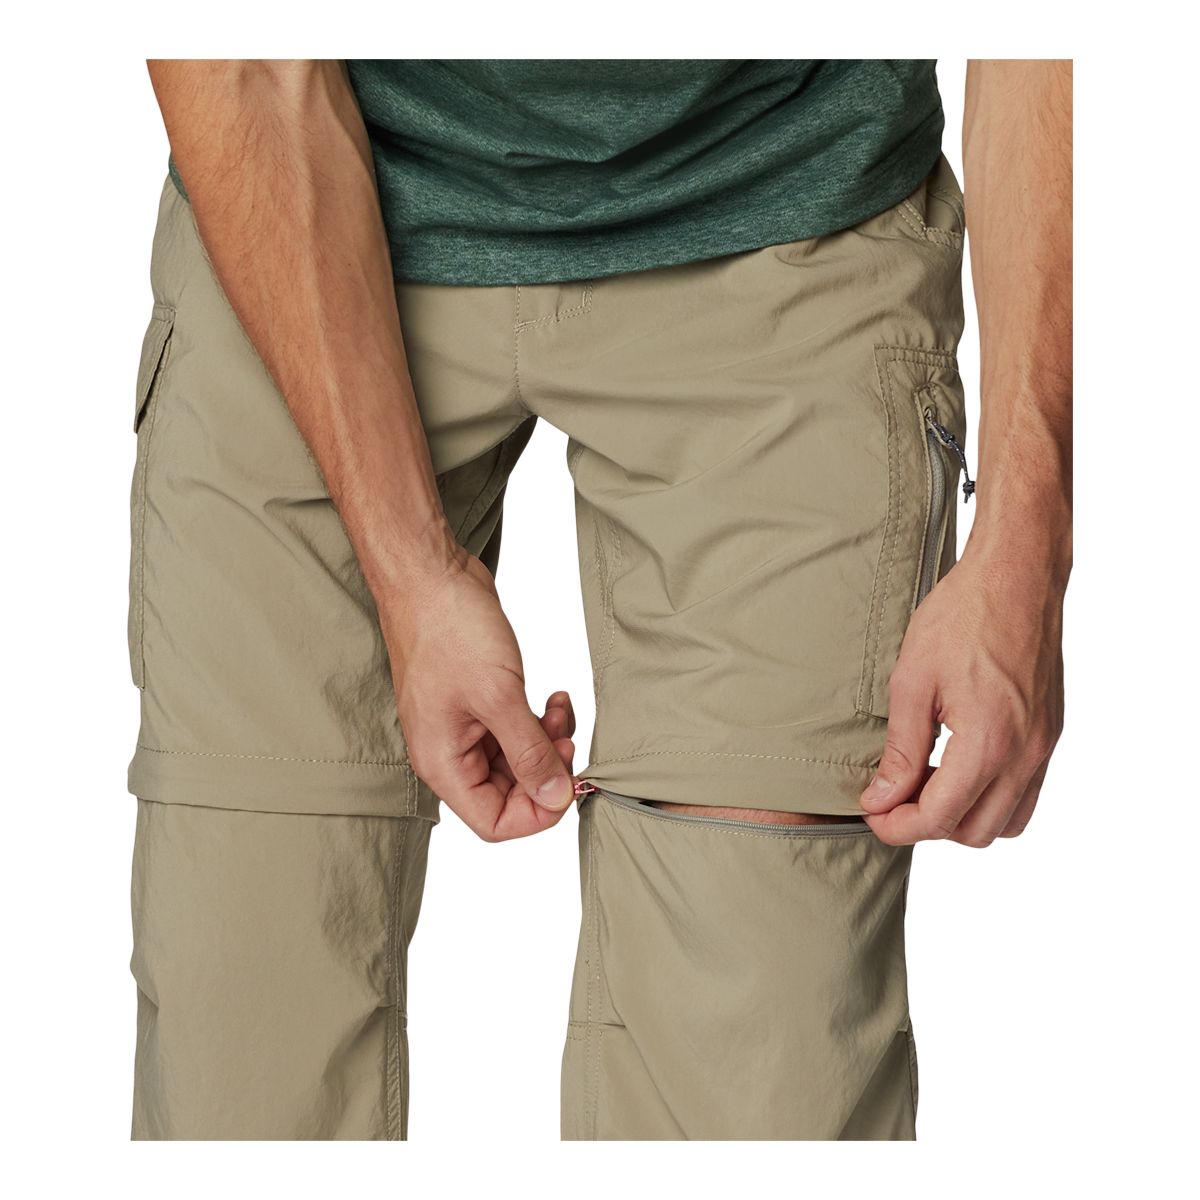 Columbia Silver Ridge Convertible Pants